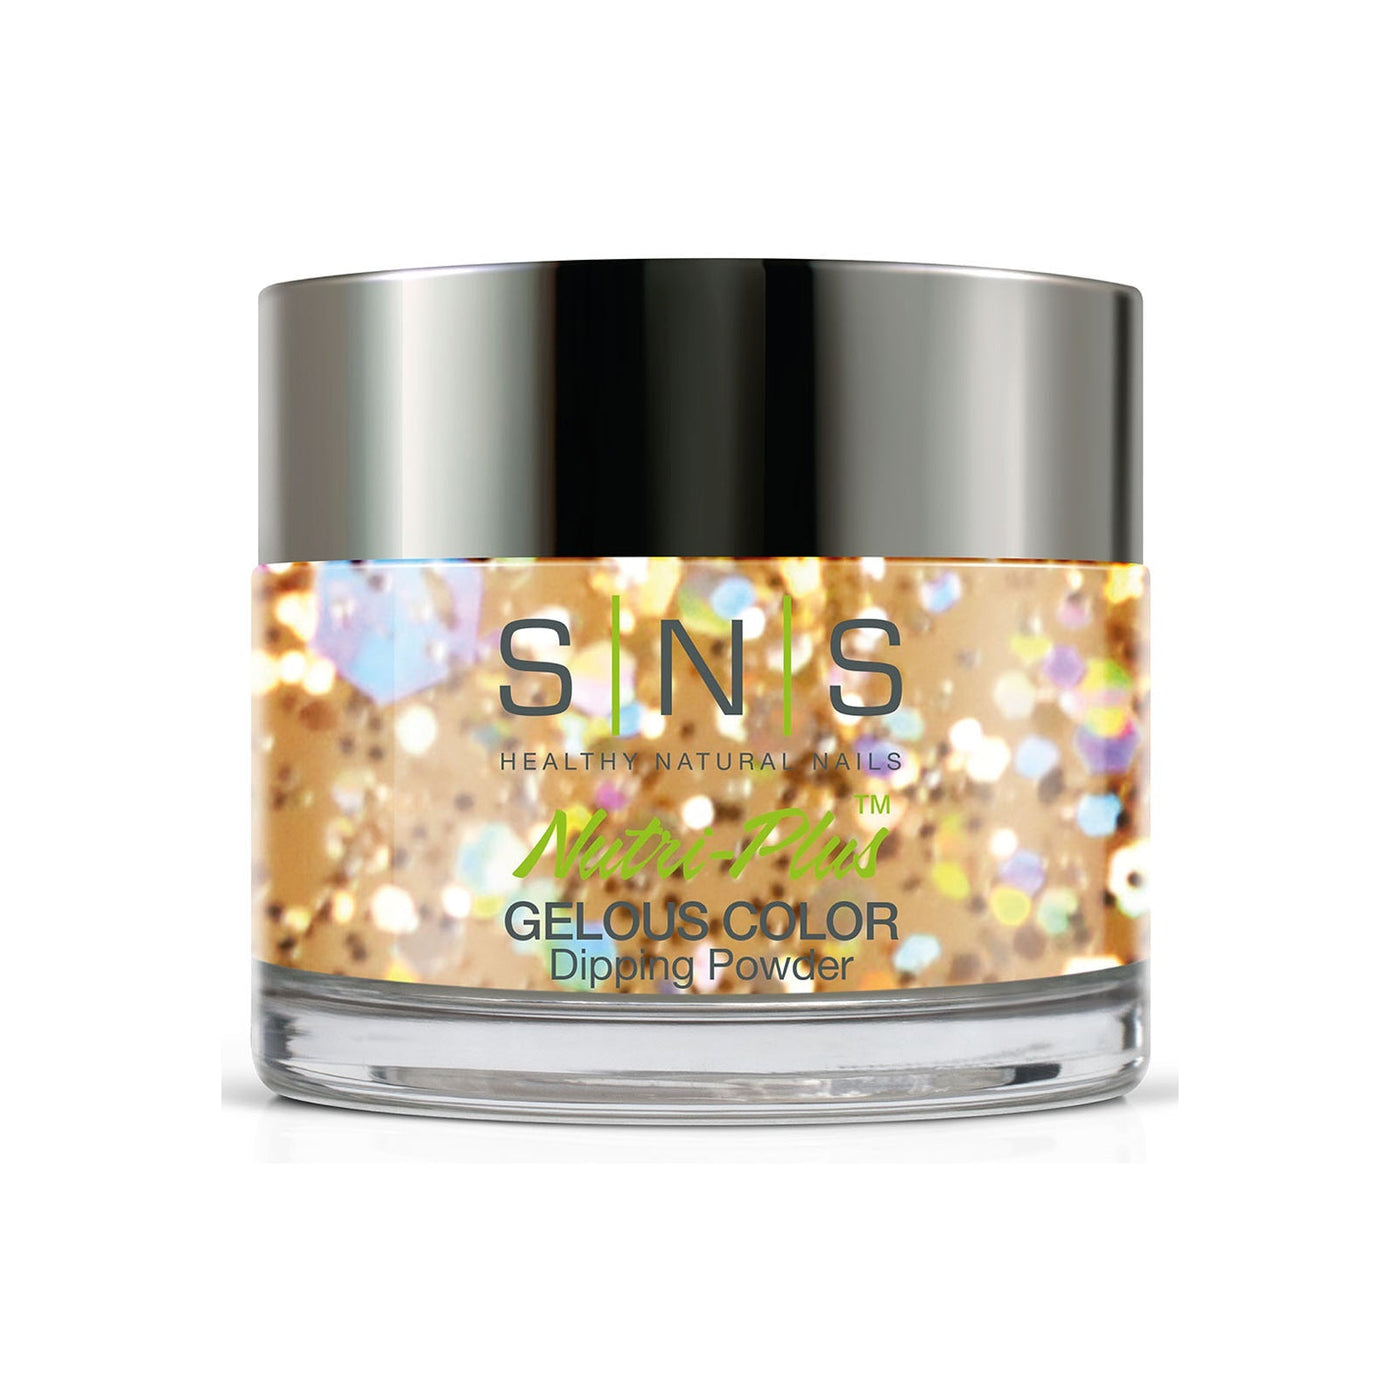 SNS Gelous Color Dipping Powder BP02 Golden Eagle (43g) packaging